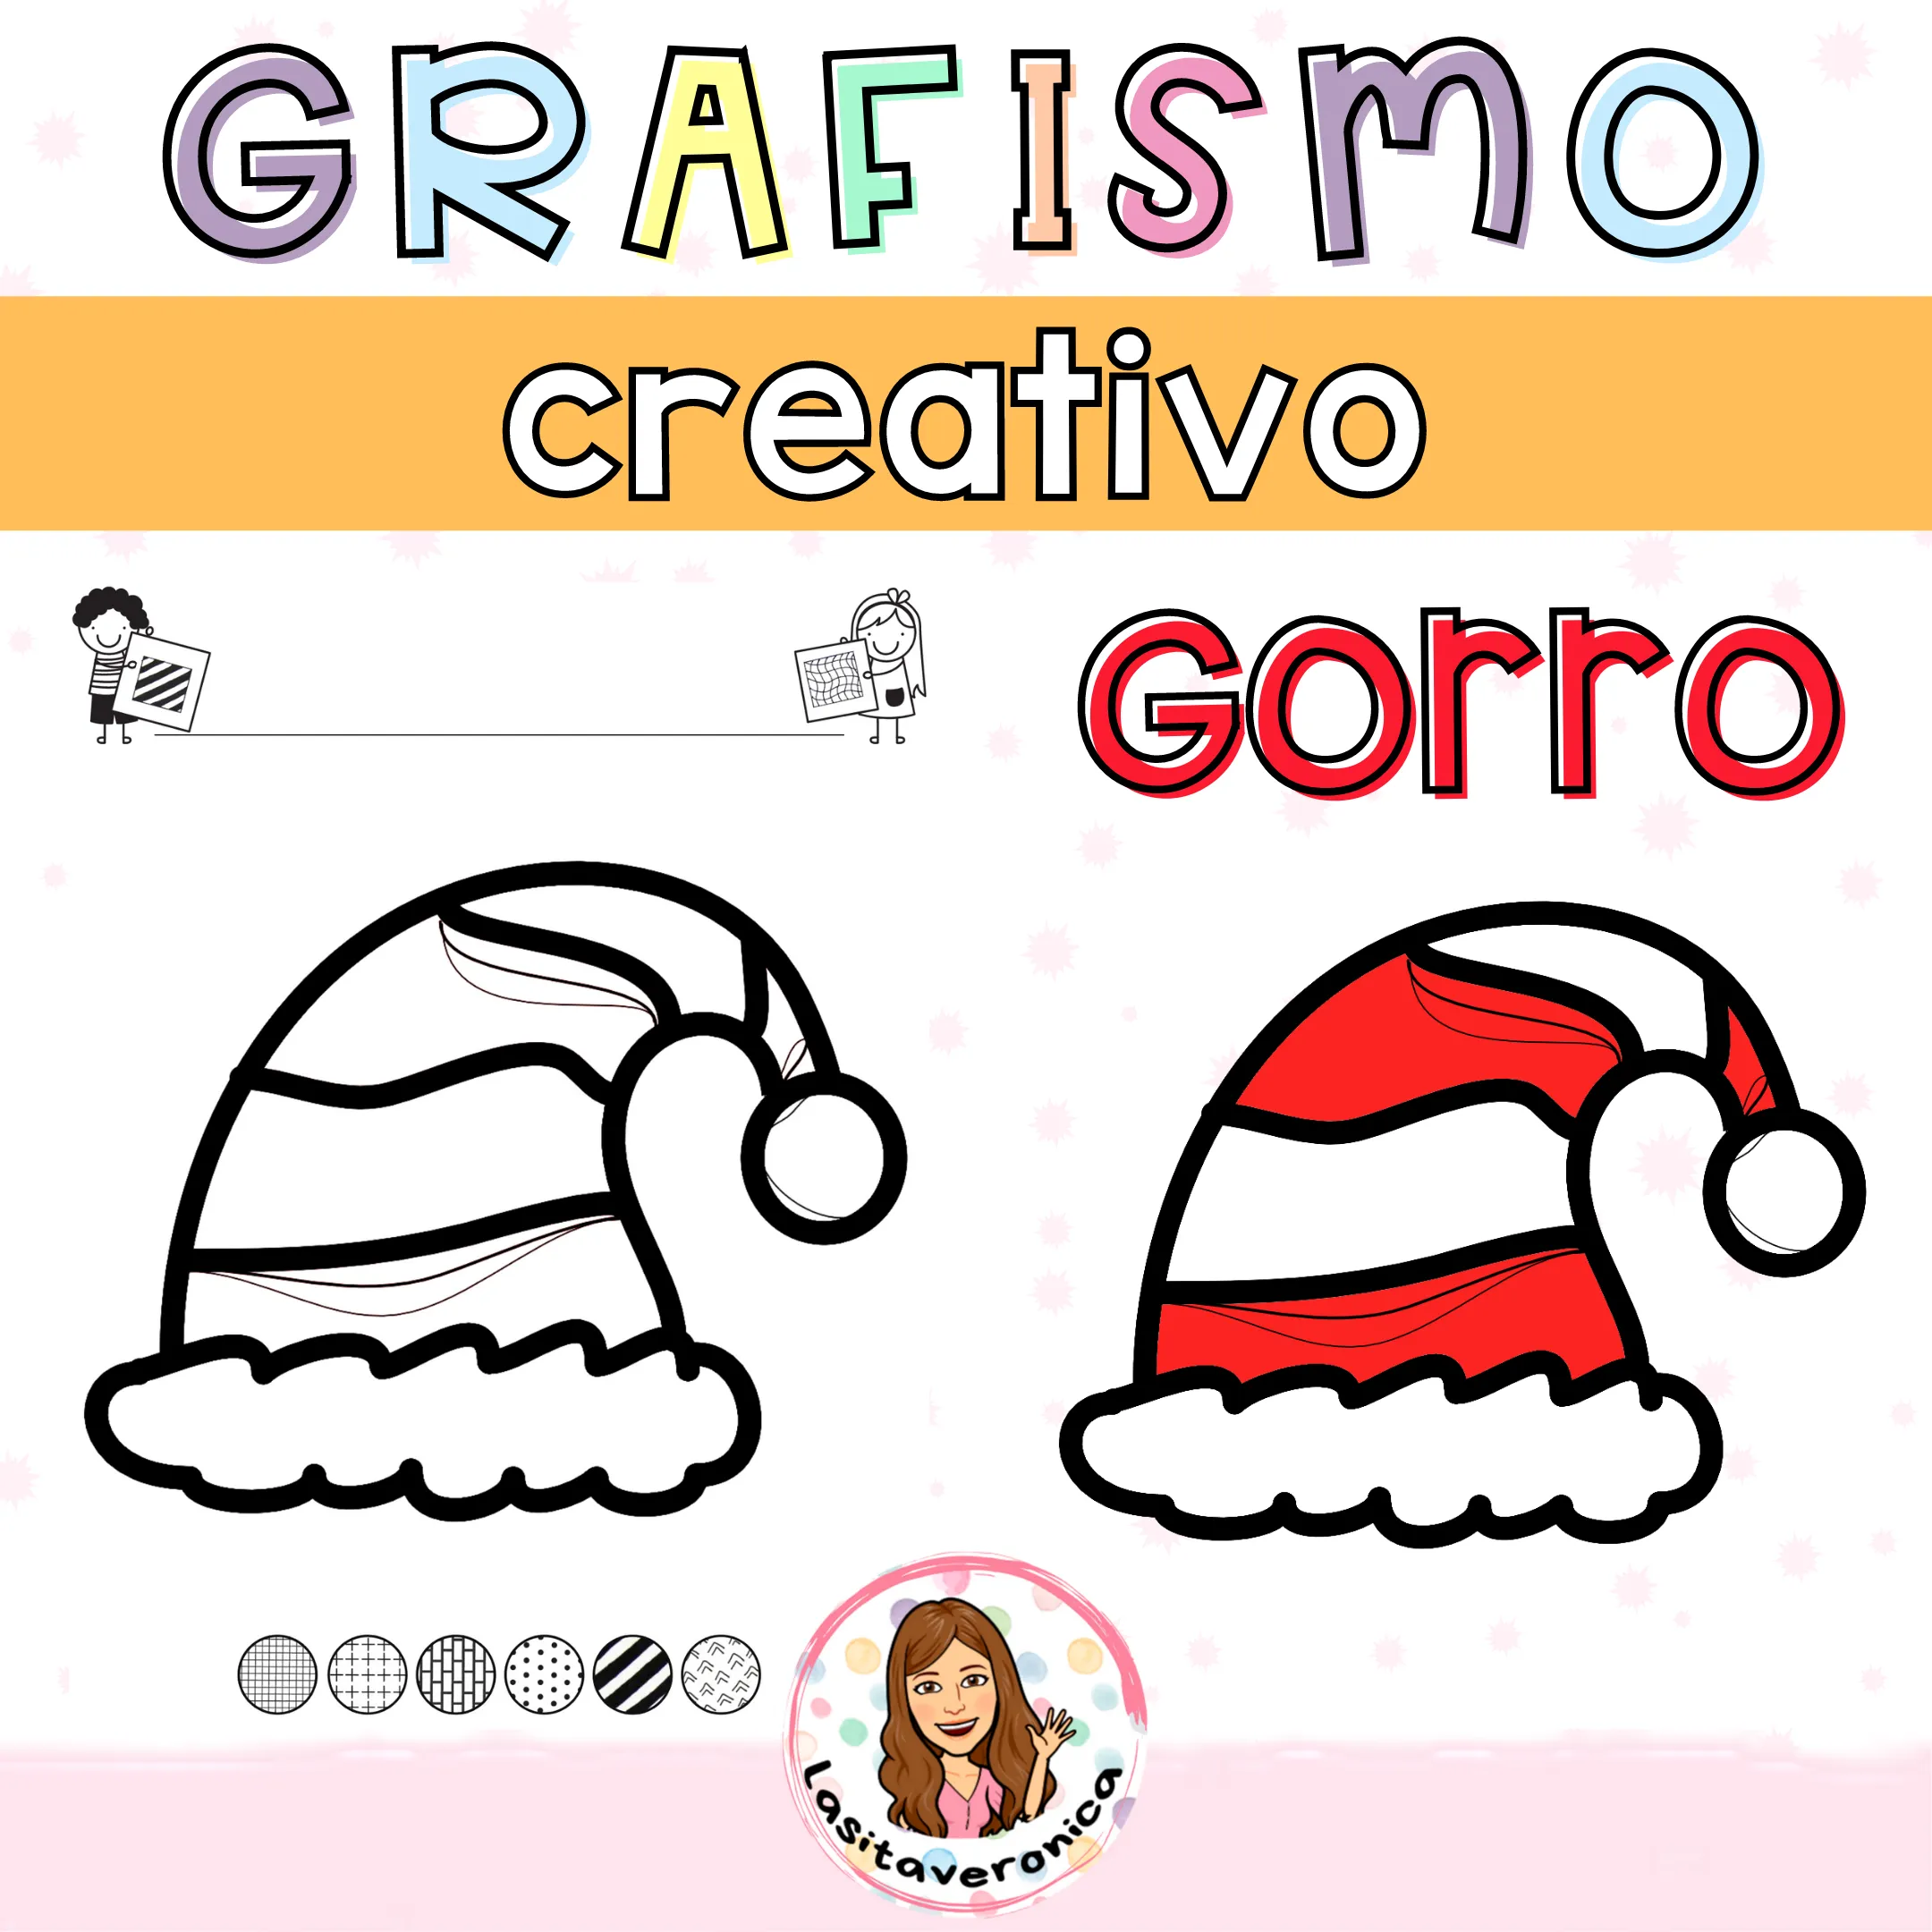 Grafismo gorro Navidad / Christmas hat Doodle 2